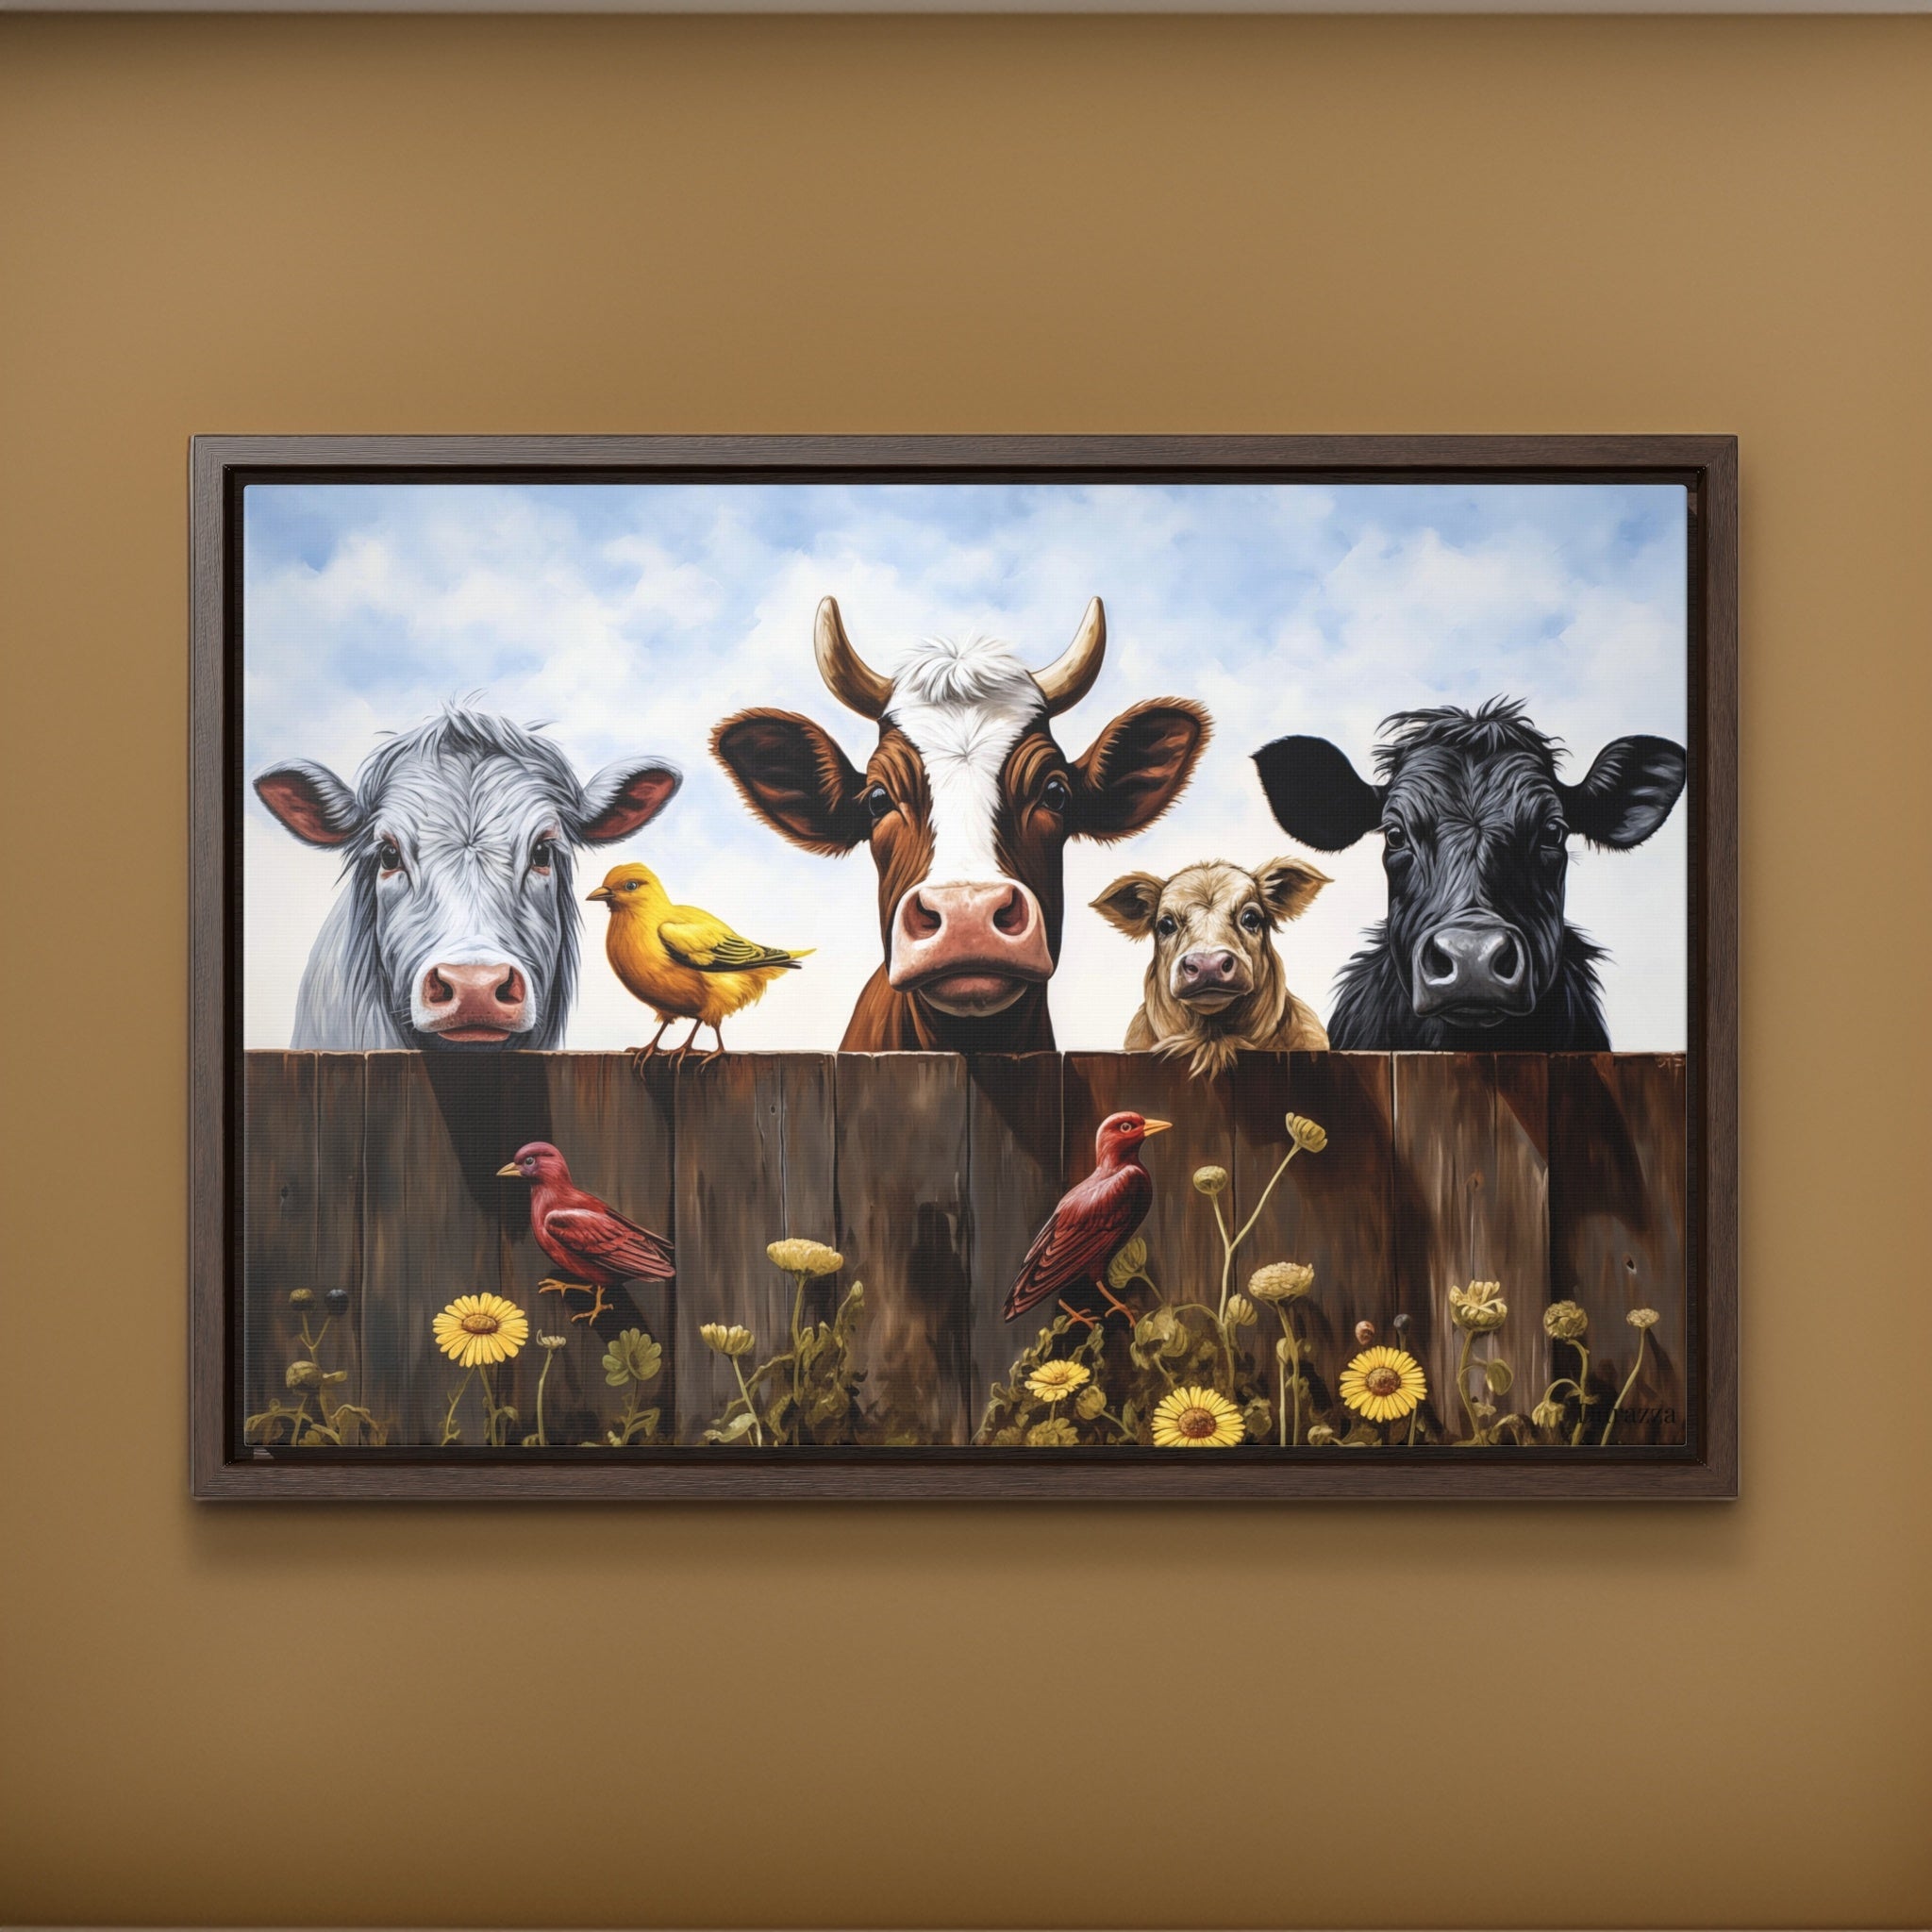 Happy Farmyard Wall Art: Cows Looking Over Rustic Fence